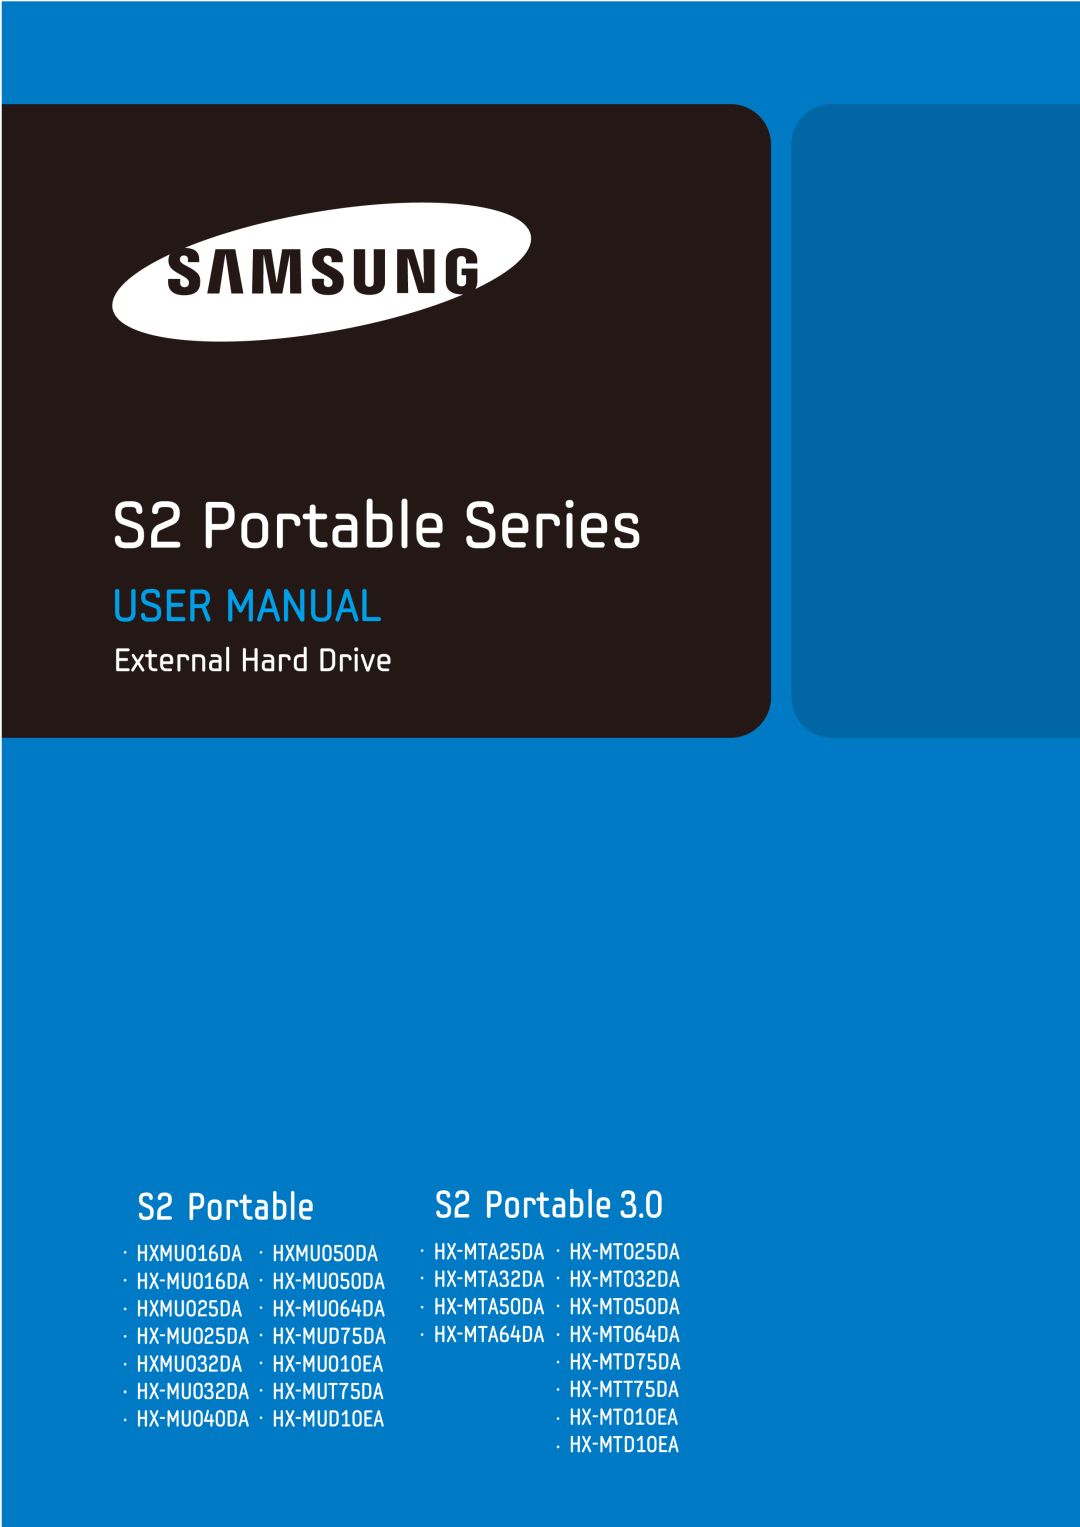 Samsung S2 PORTABLE 3.0 user manual S2 Portable Series, User Manual, External Hard Drive, ·HXMU016DA ·HXMU050DA 